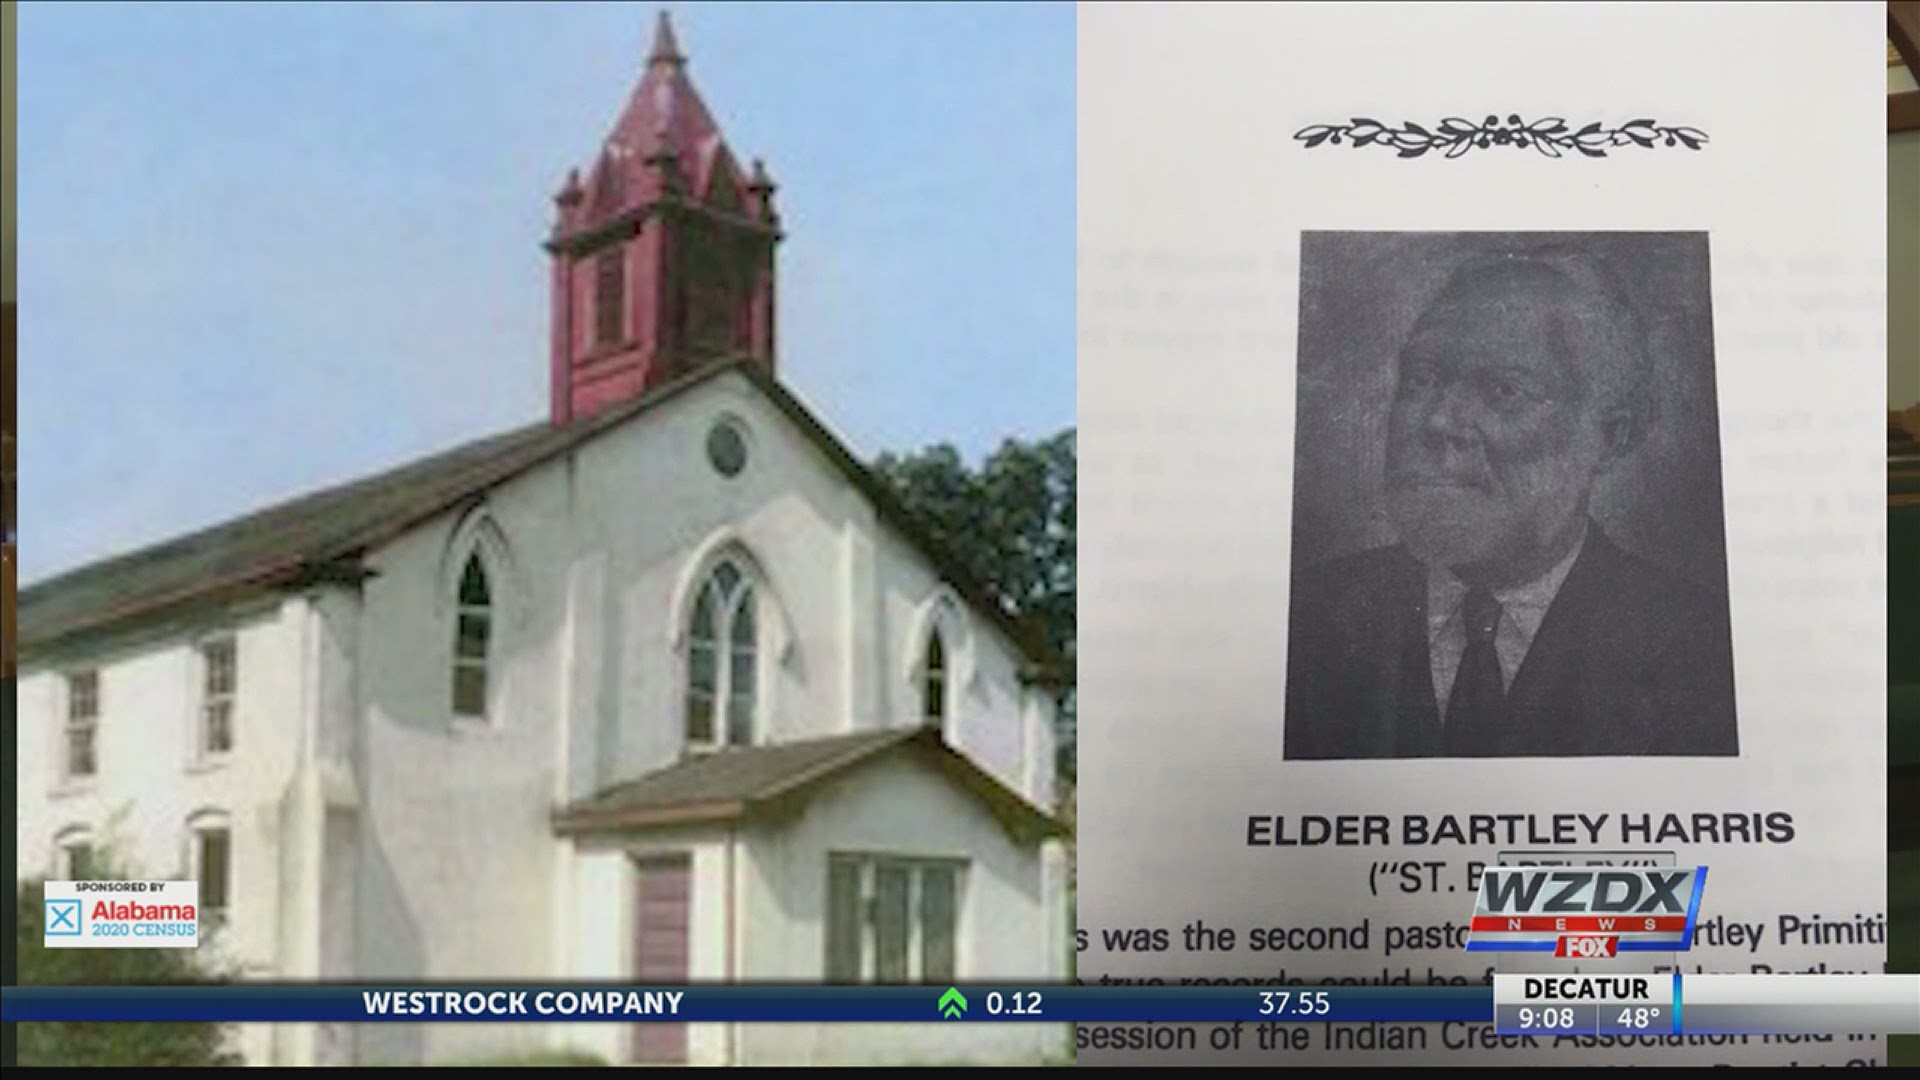 St. Bartley Primitive Baptist Church congregation began their festivities at MidCity.